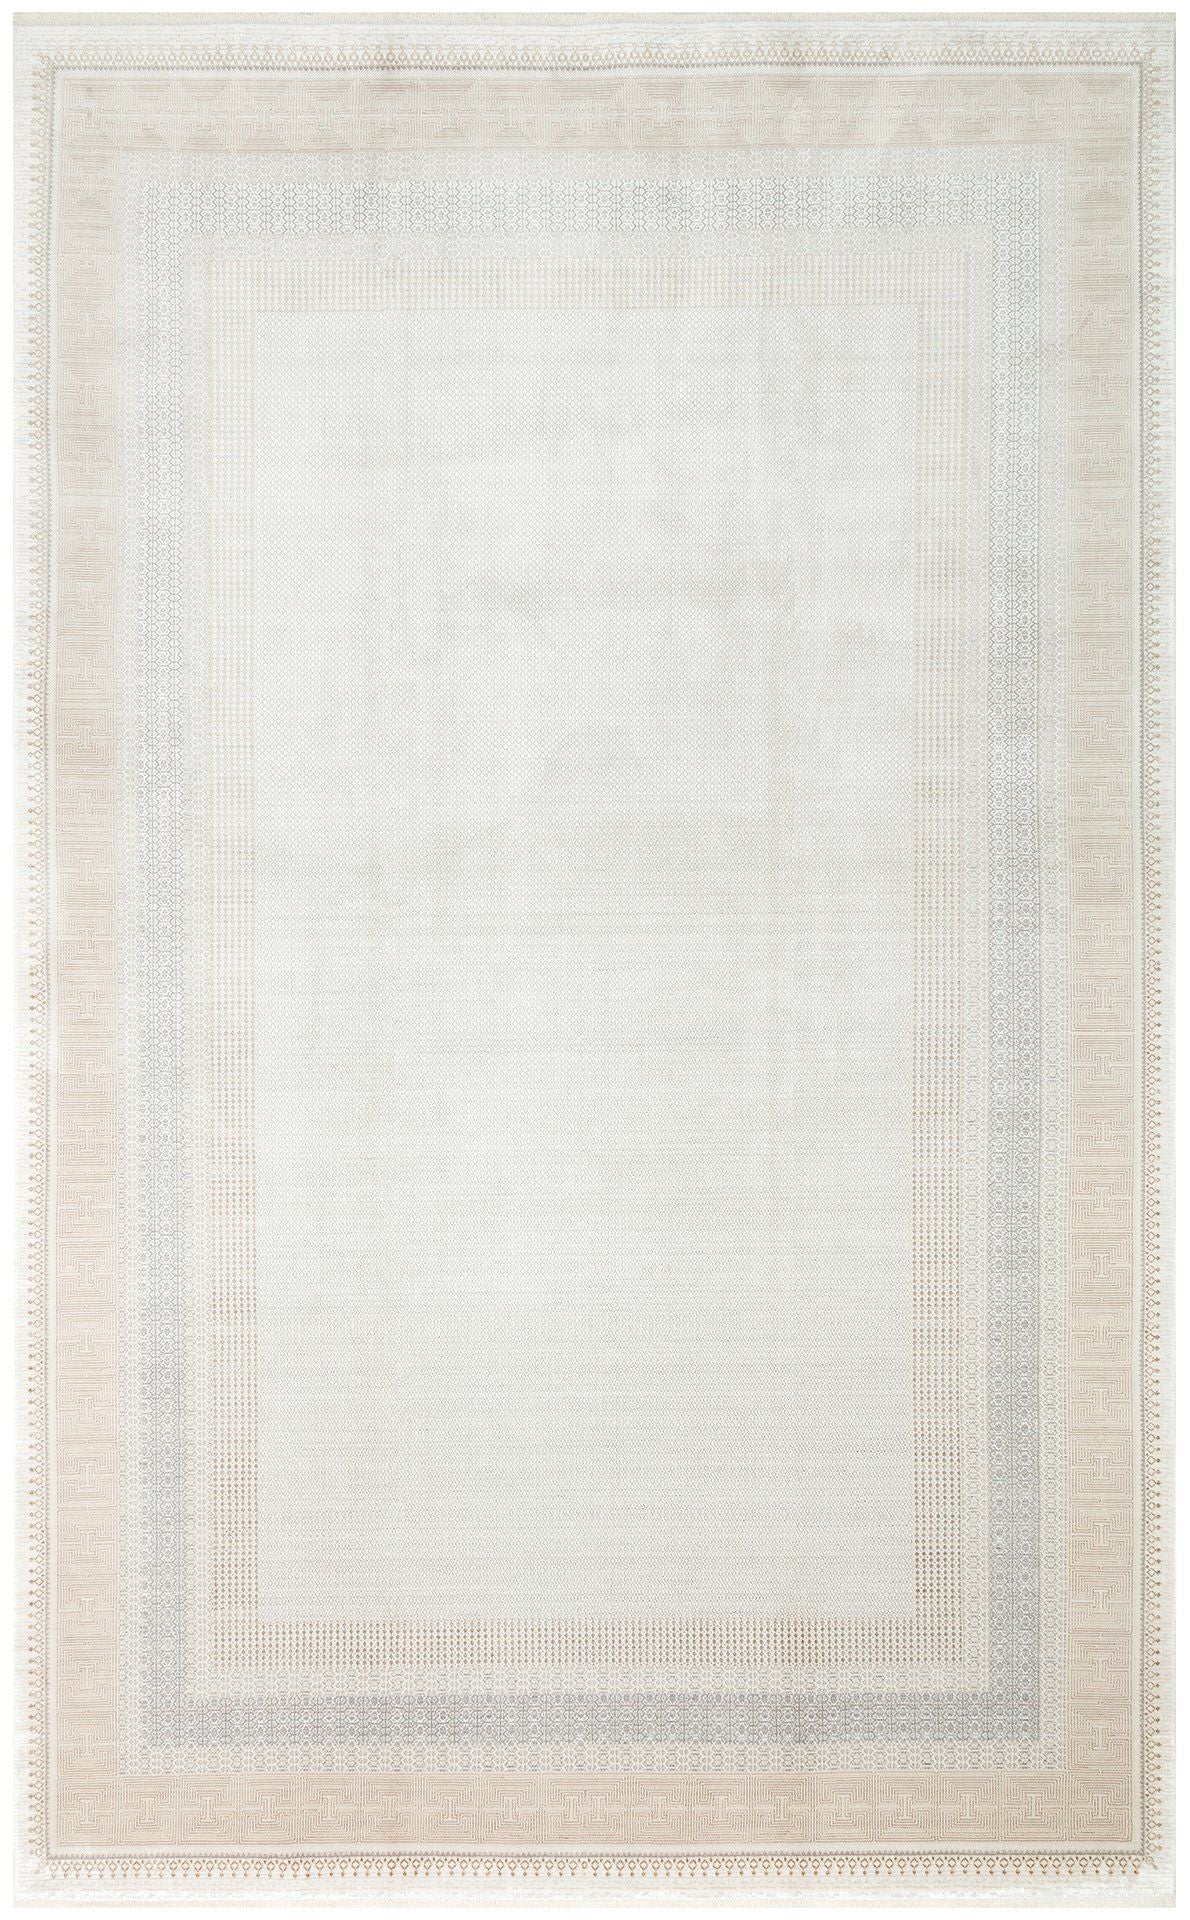 Mhl 07 - Creme, guld - Hall tæppe (100 x 200)